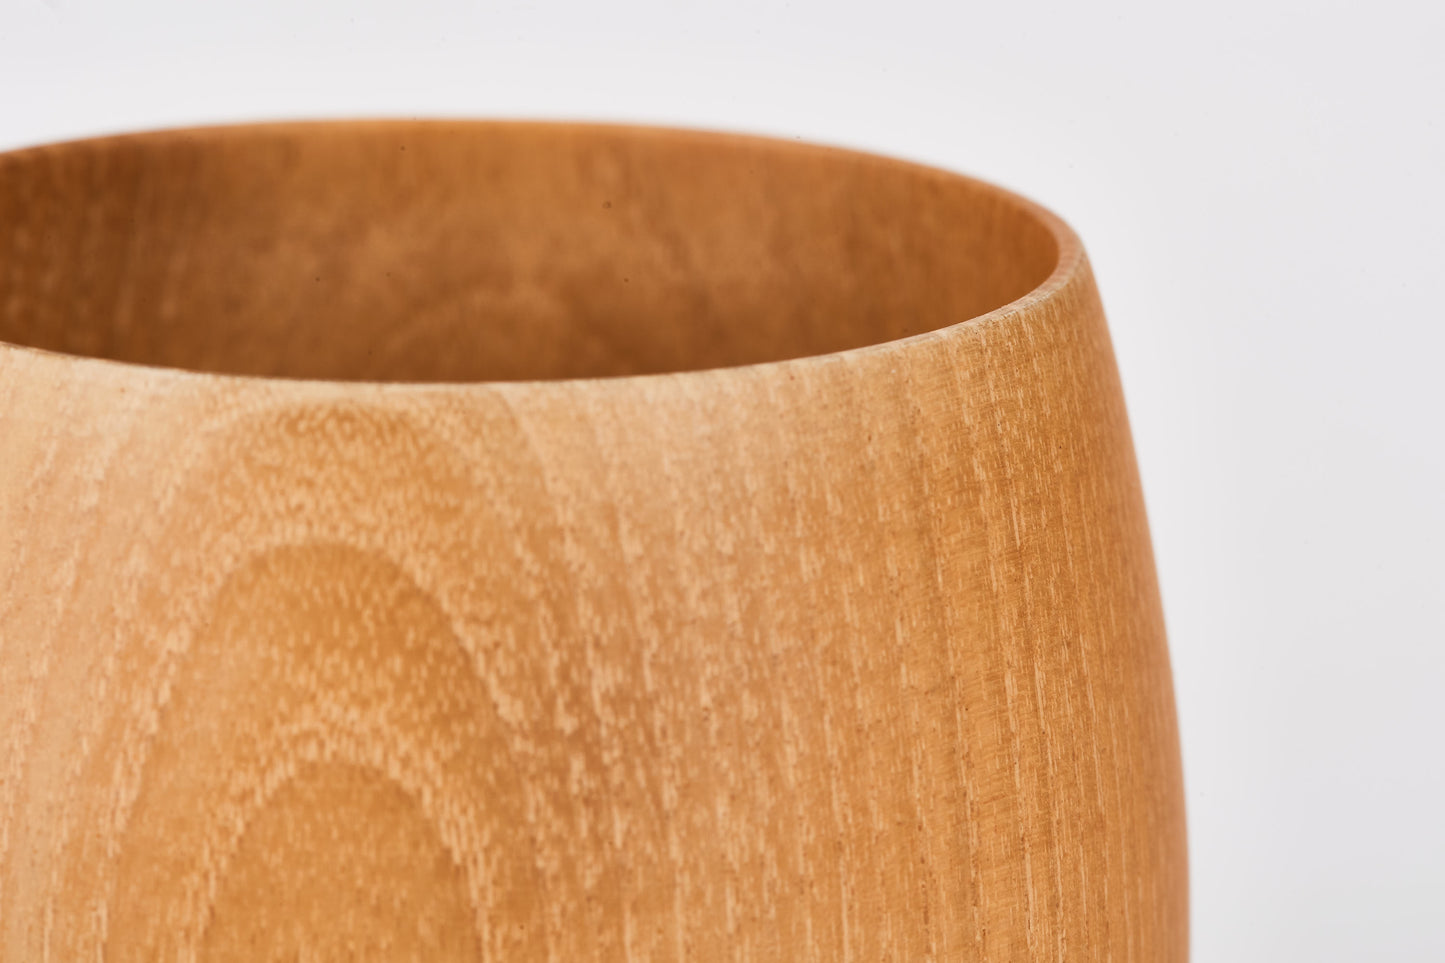 Japanese Wooden Cup - details - rim